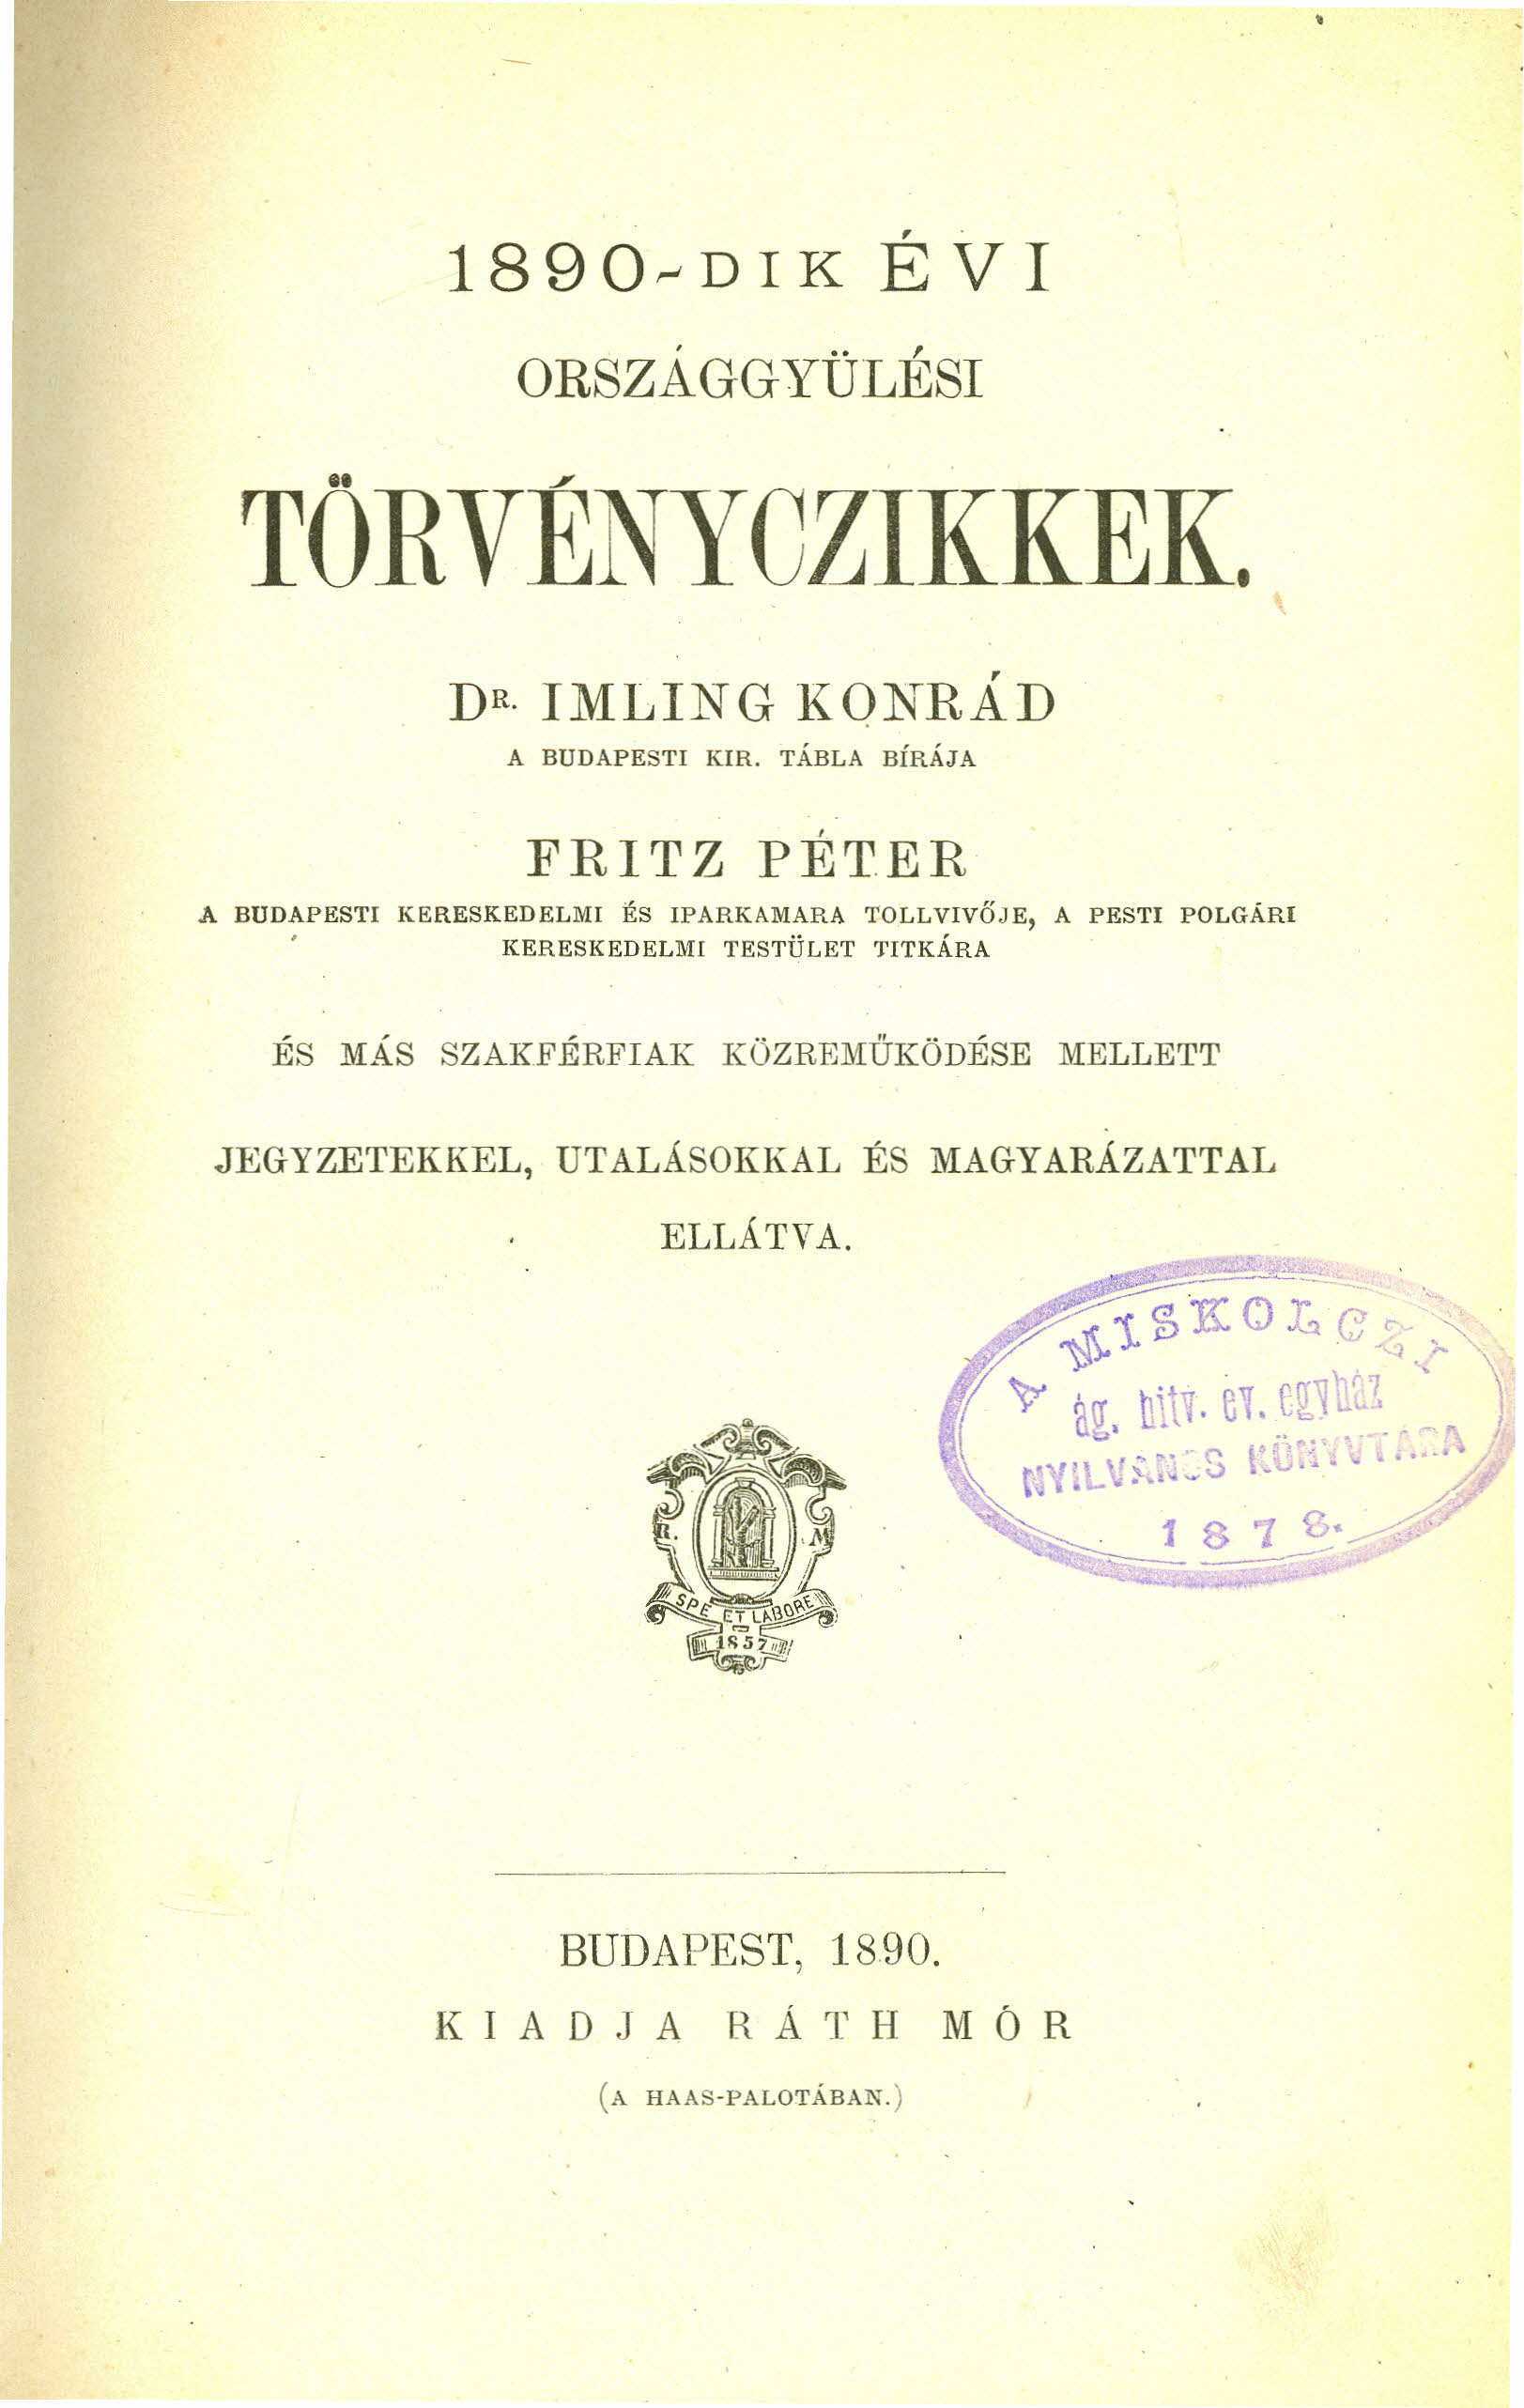 1890,...DIK ÉVI,.., ORSZAGGYULESI TORVÉNYCZIKKEK. DR. IMLING KQNRÁD A BUDAPESTI KIR.